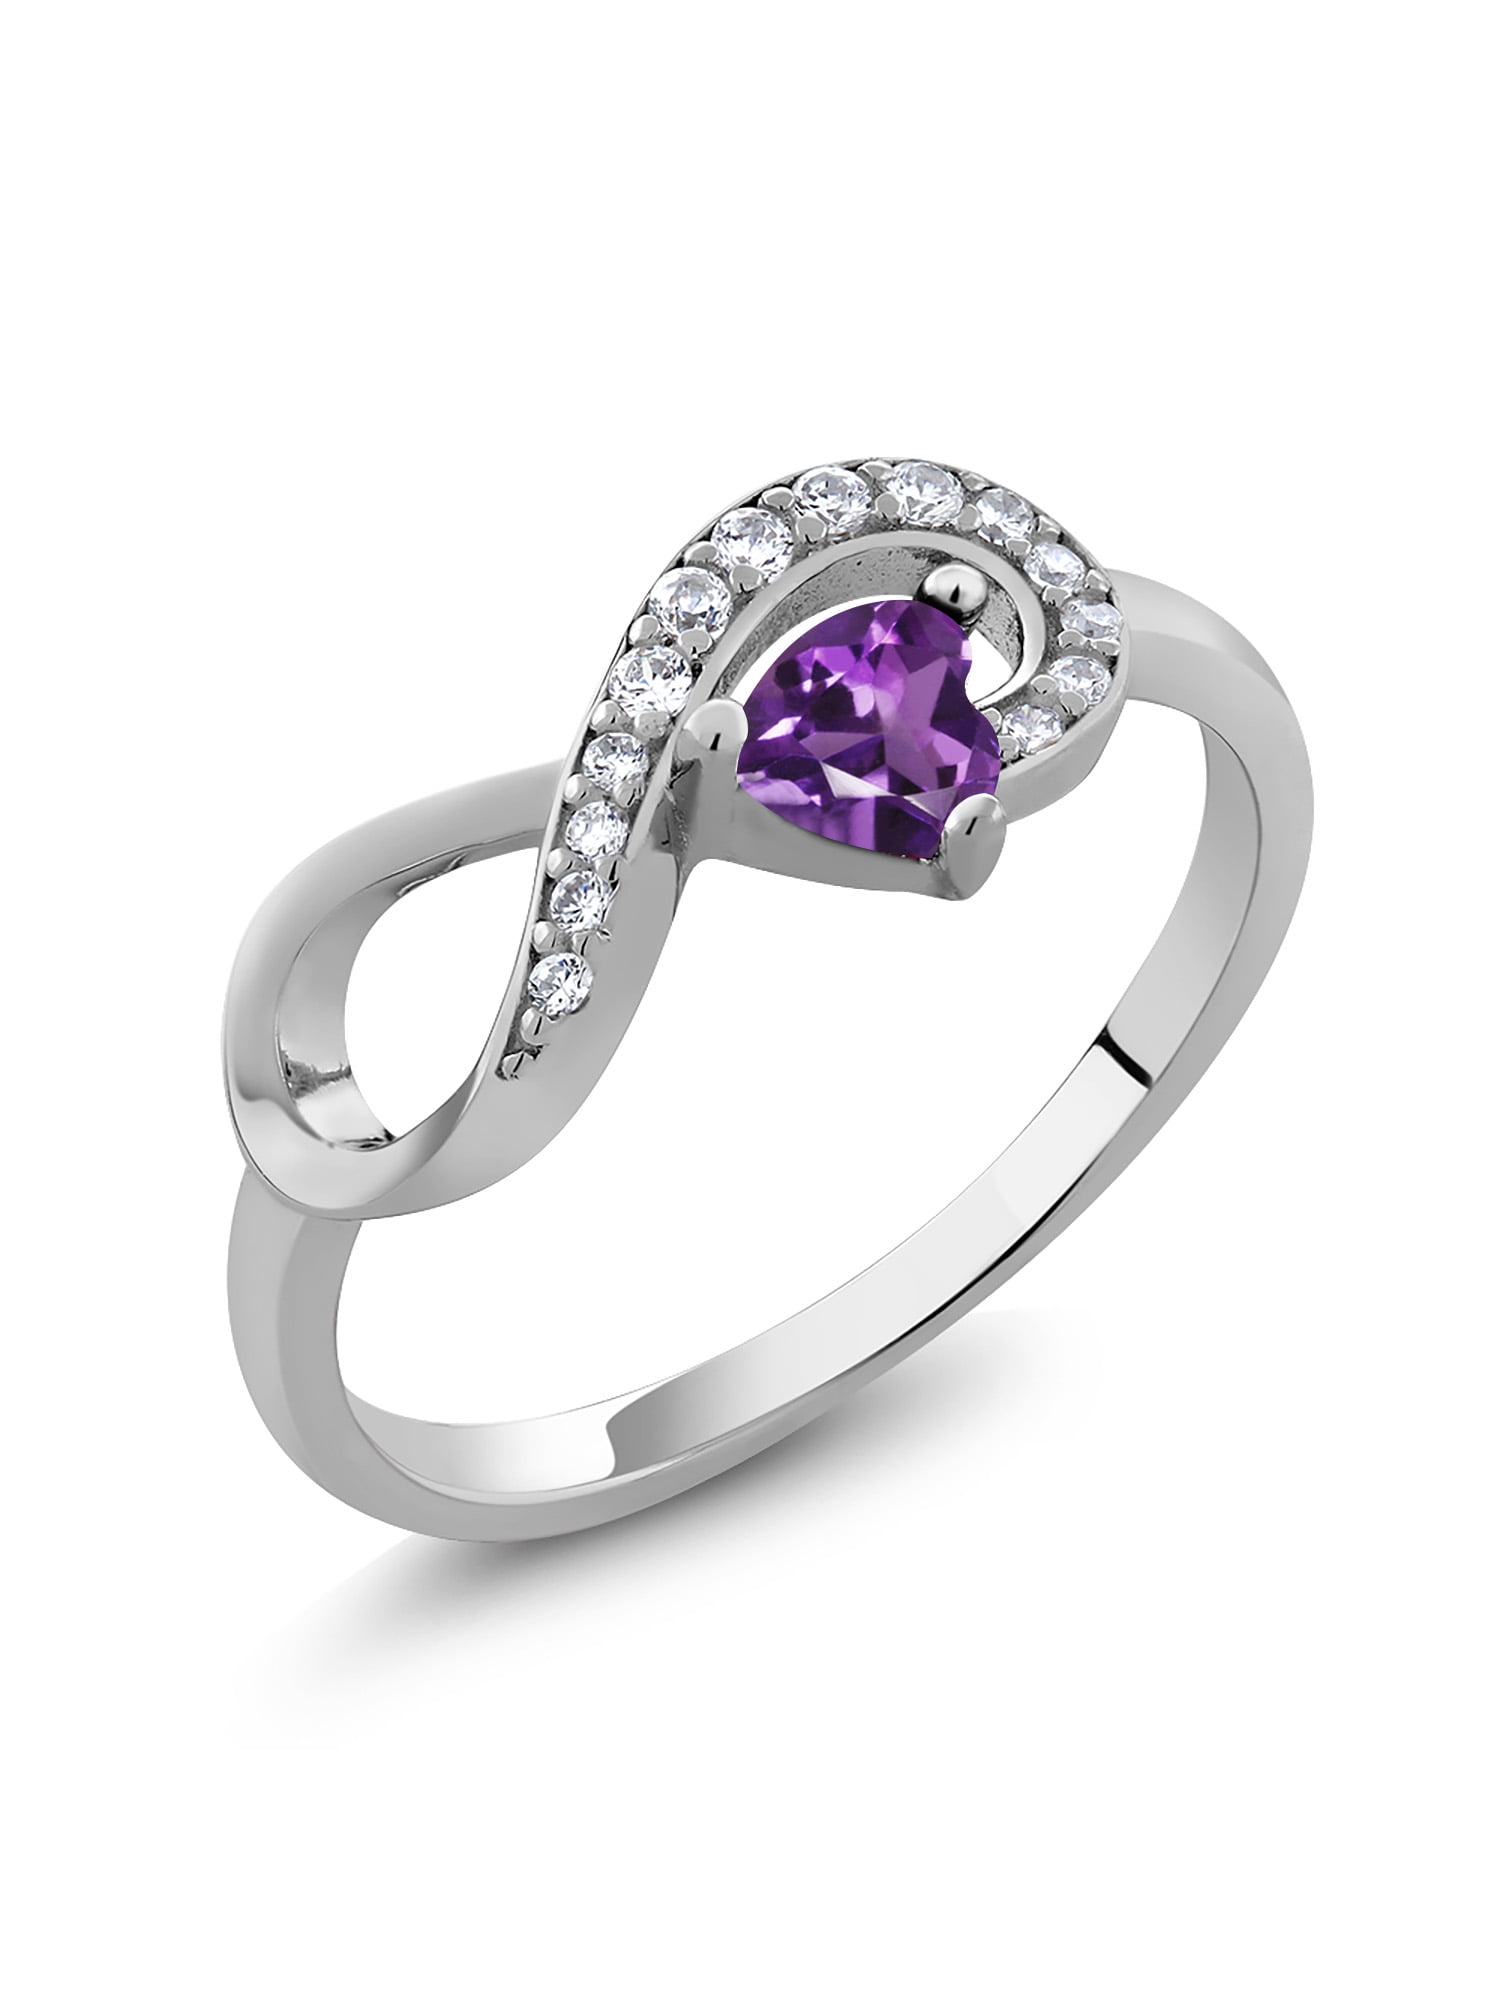 Gem Stone King 925 Sterling Silver Purple Amethyst Infinity Ring